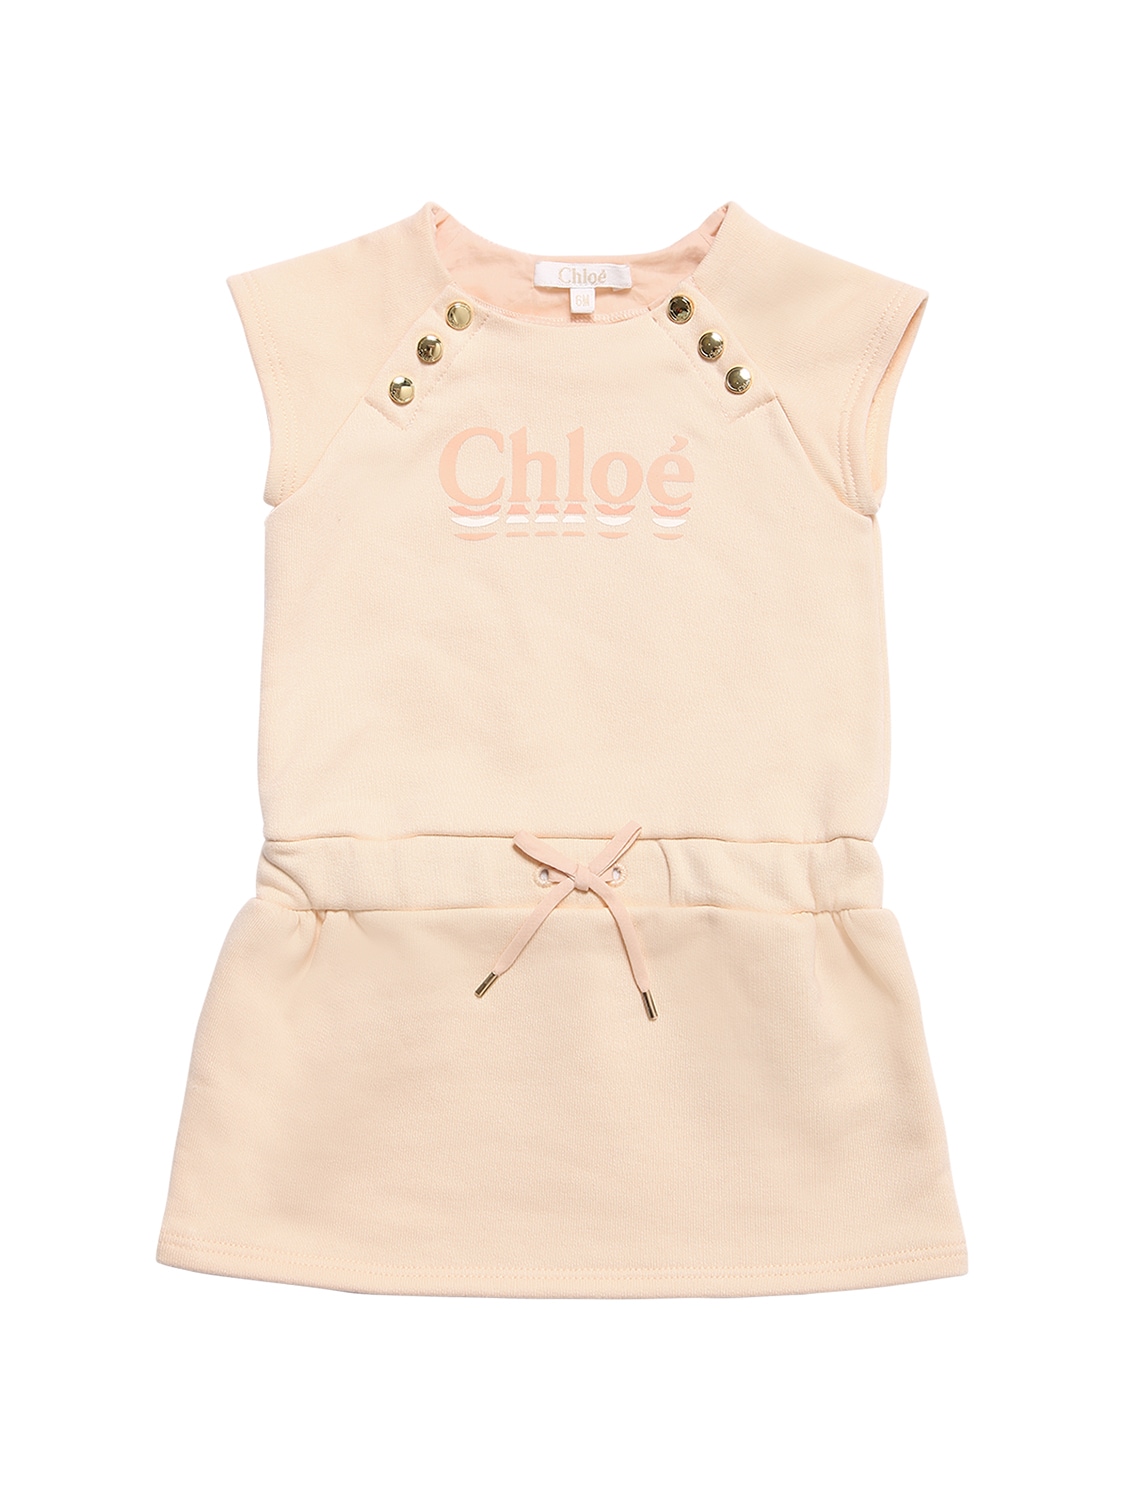 Chloé Girls' Logo Button Trim Dress - Baby In Pink Ice